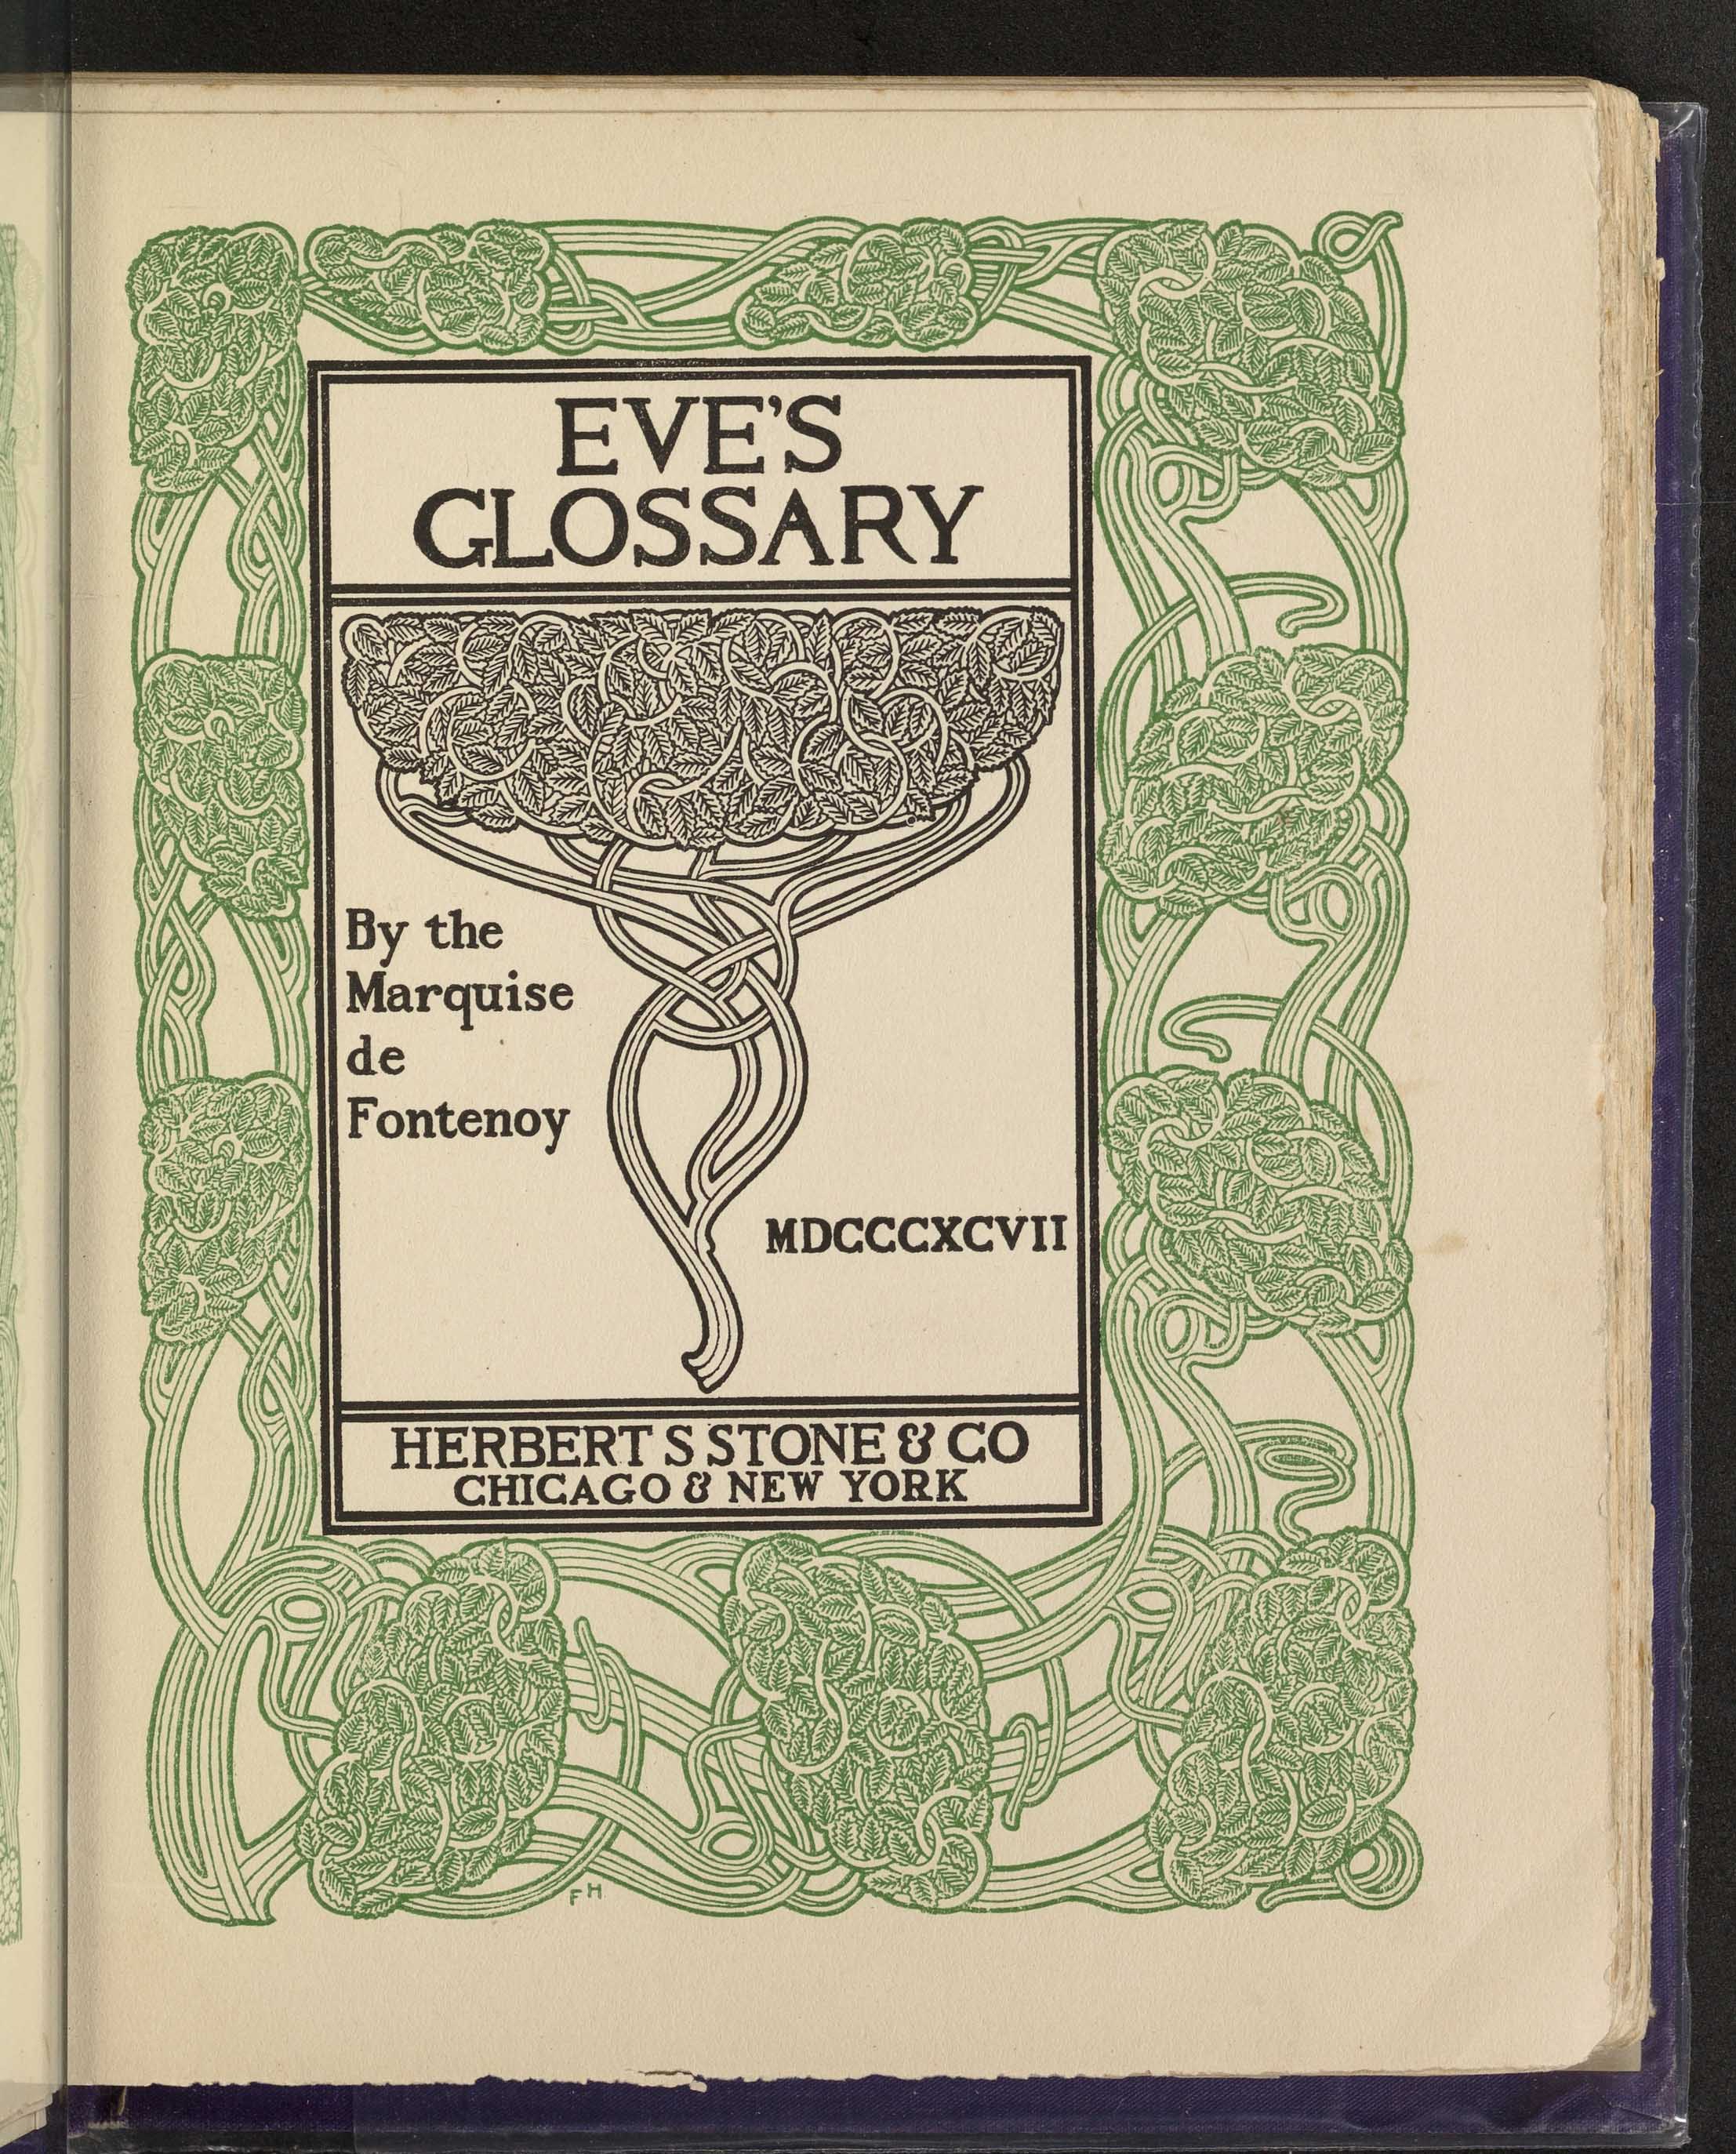 Eve's Glossary